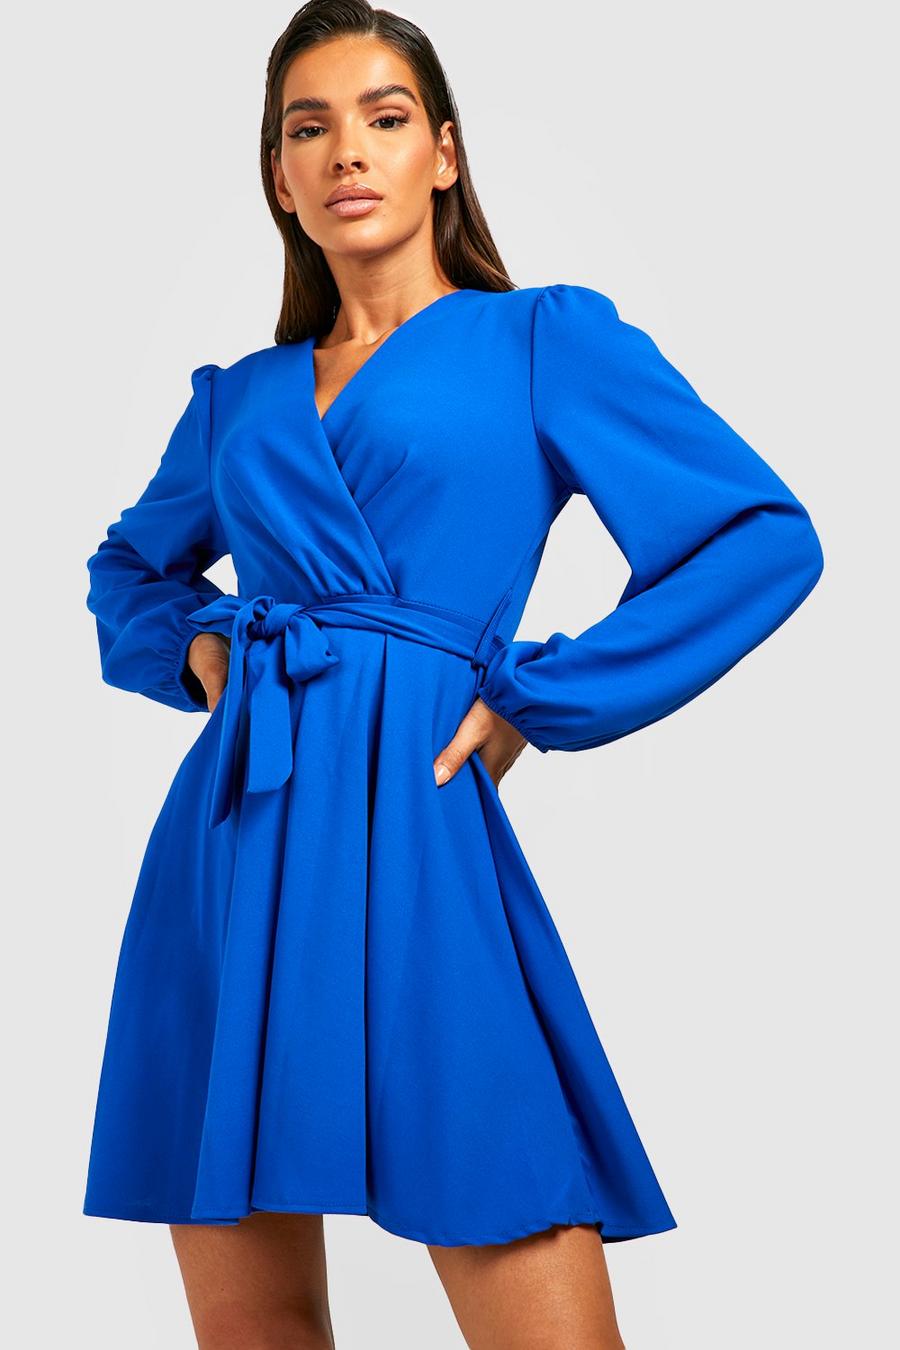 Cobalt azul שמלת סקייטר מידי בסגנון מעטפת עם שרוולים תפוחים